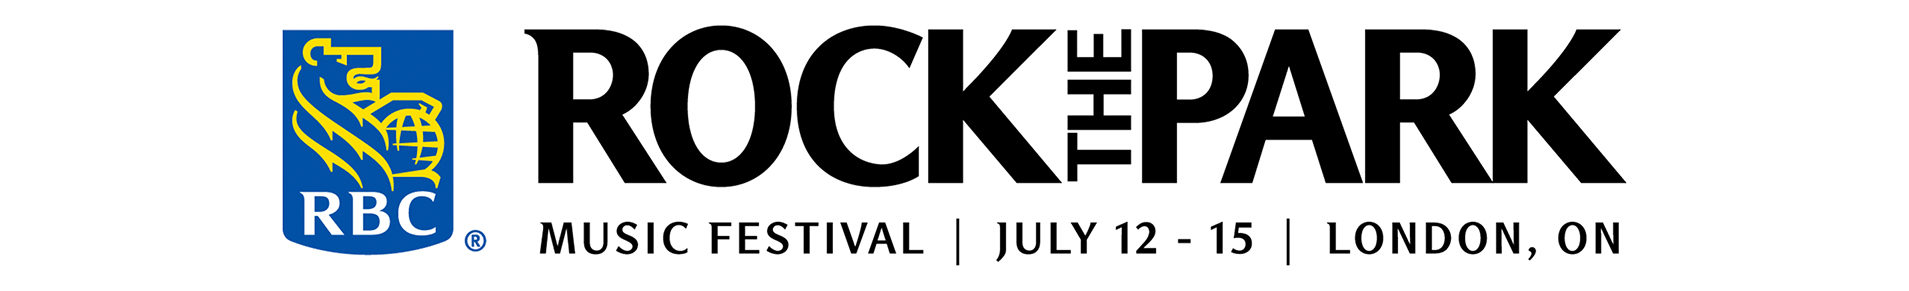 Rock the Park Music Festival - London, Ontario